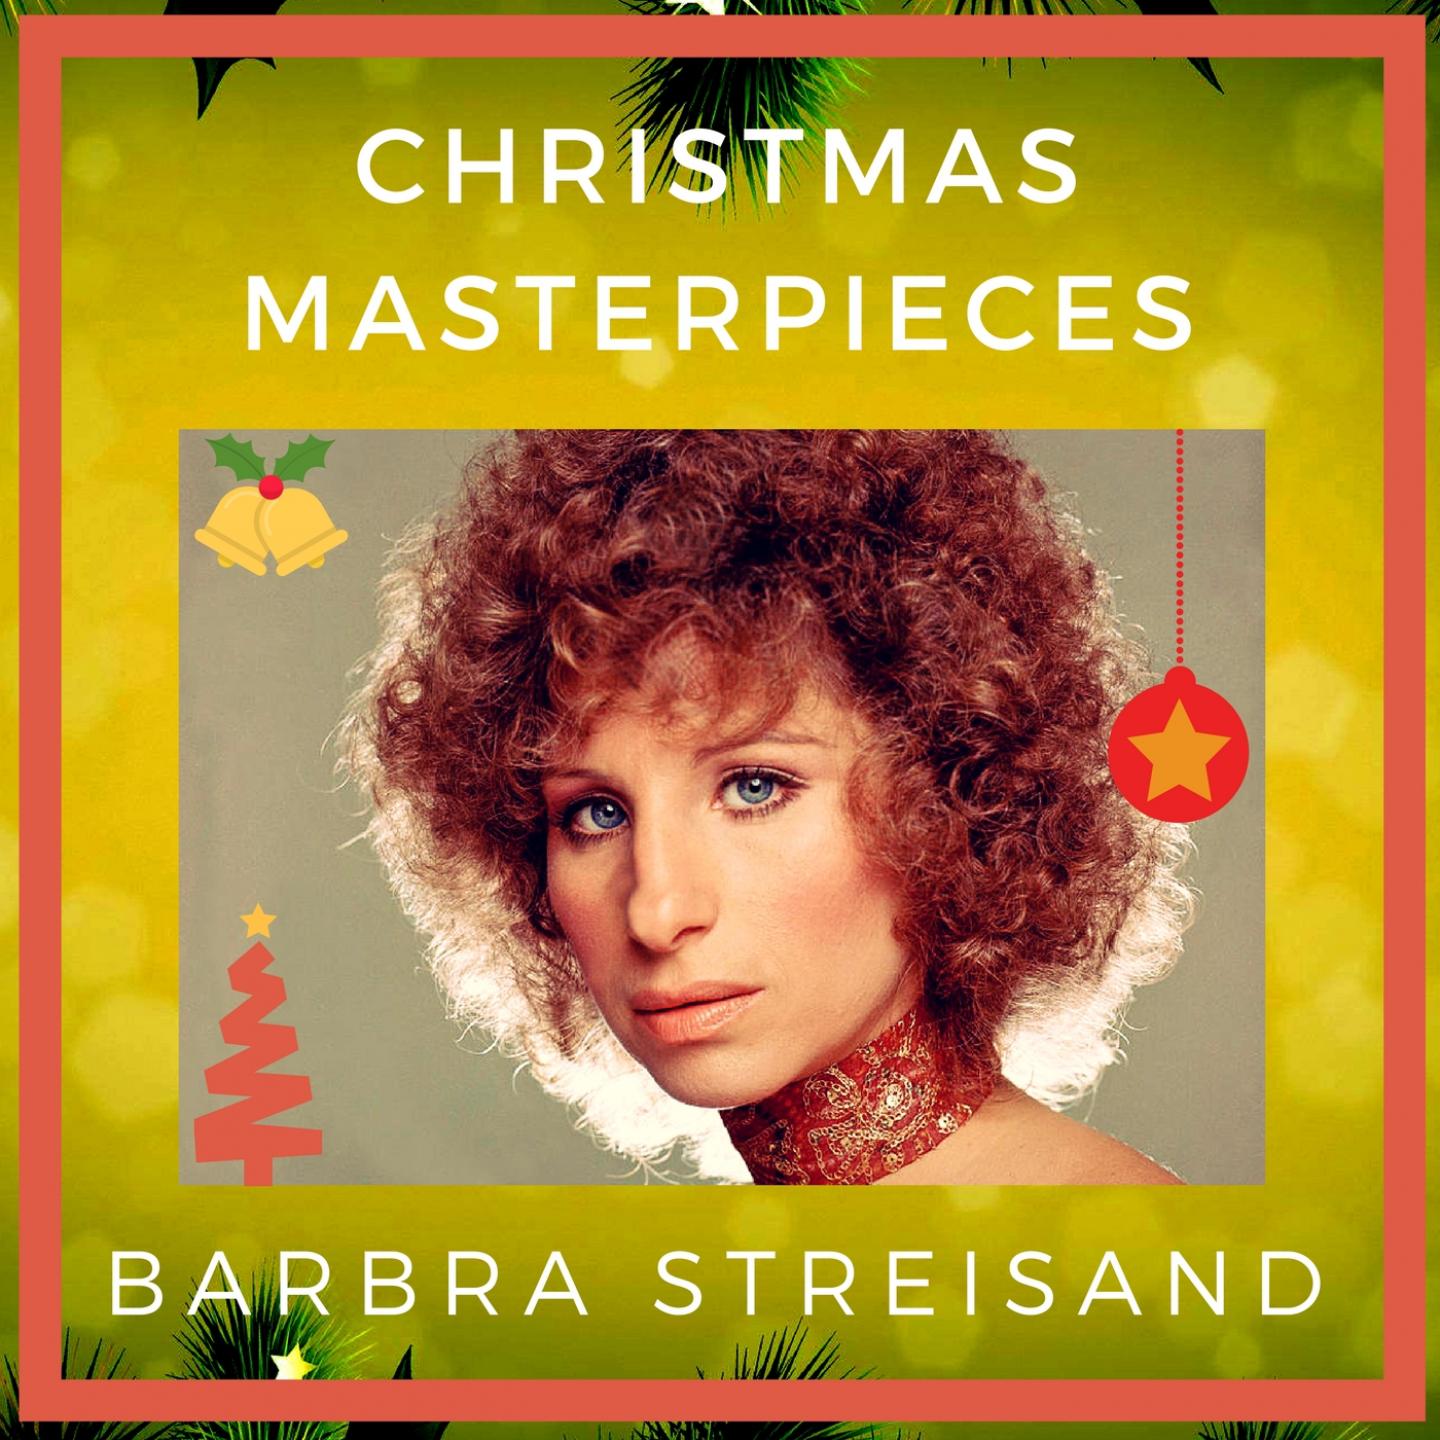 Barbra streisand woman. Барбара Стрейзанд woman in Love. Woman in Love Барбра Стрейзанд. Barbra Streisand альбом. The Barbra Streisand album Барбра Стрейзанд.